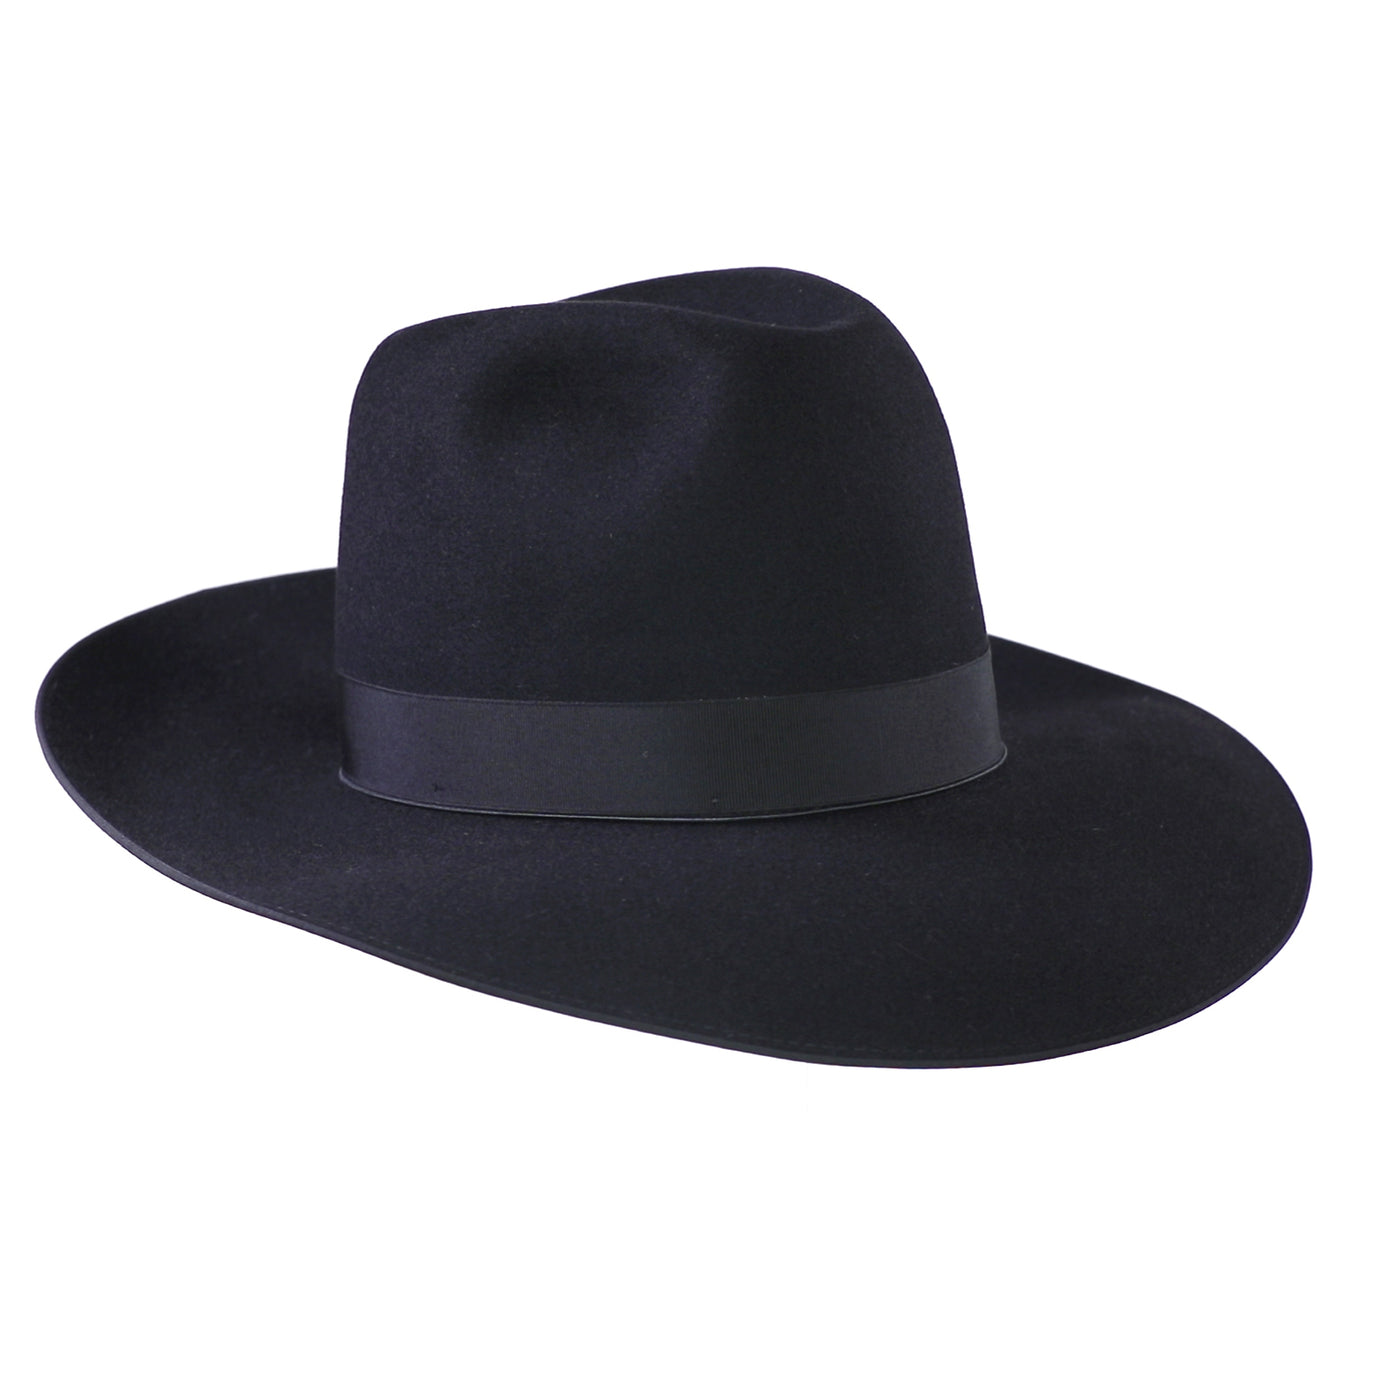 Luccini 334, product_type] - Borsalino for Atica fedora hat